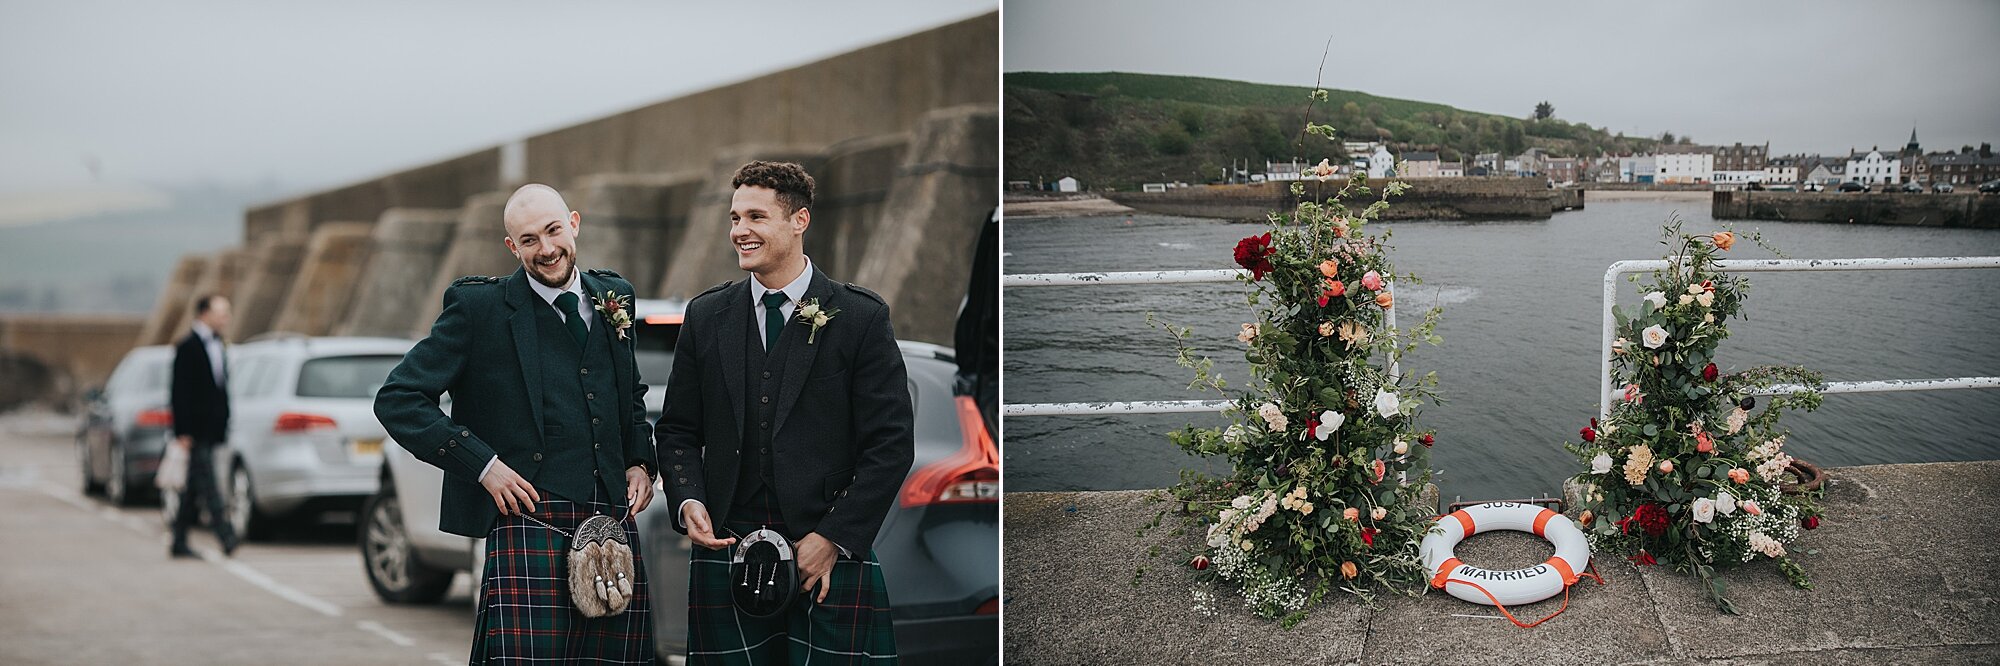 Dunbar wedding photographer-9.jpg